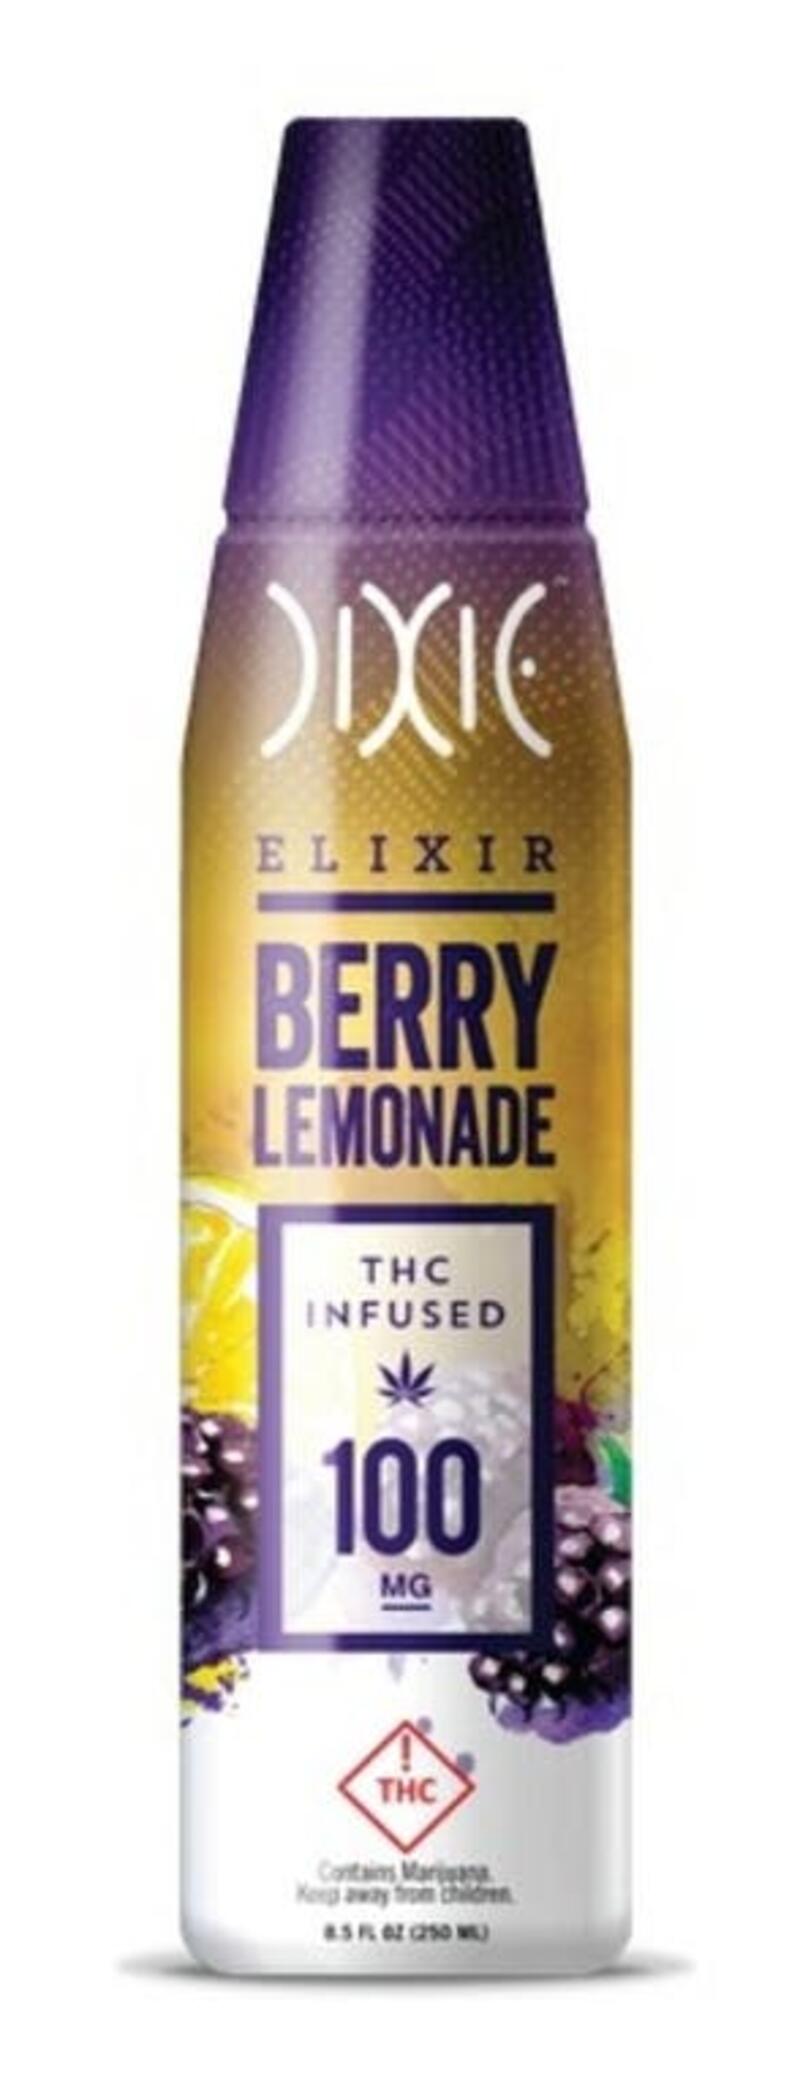 Dixie Elixir Berry Lemonade 100mg